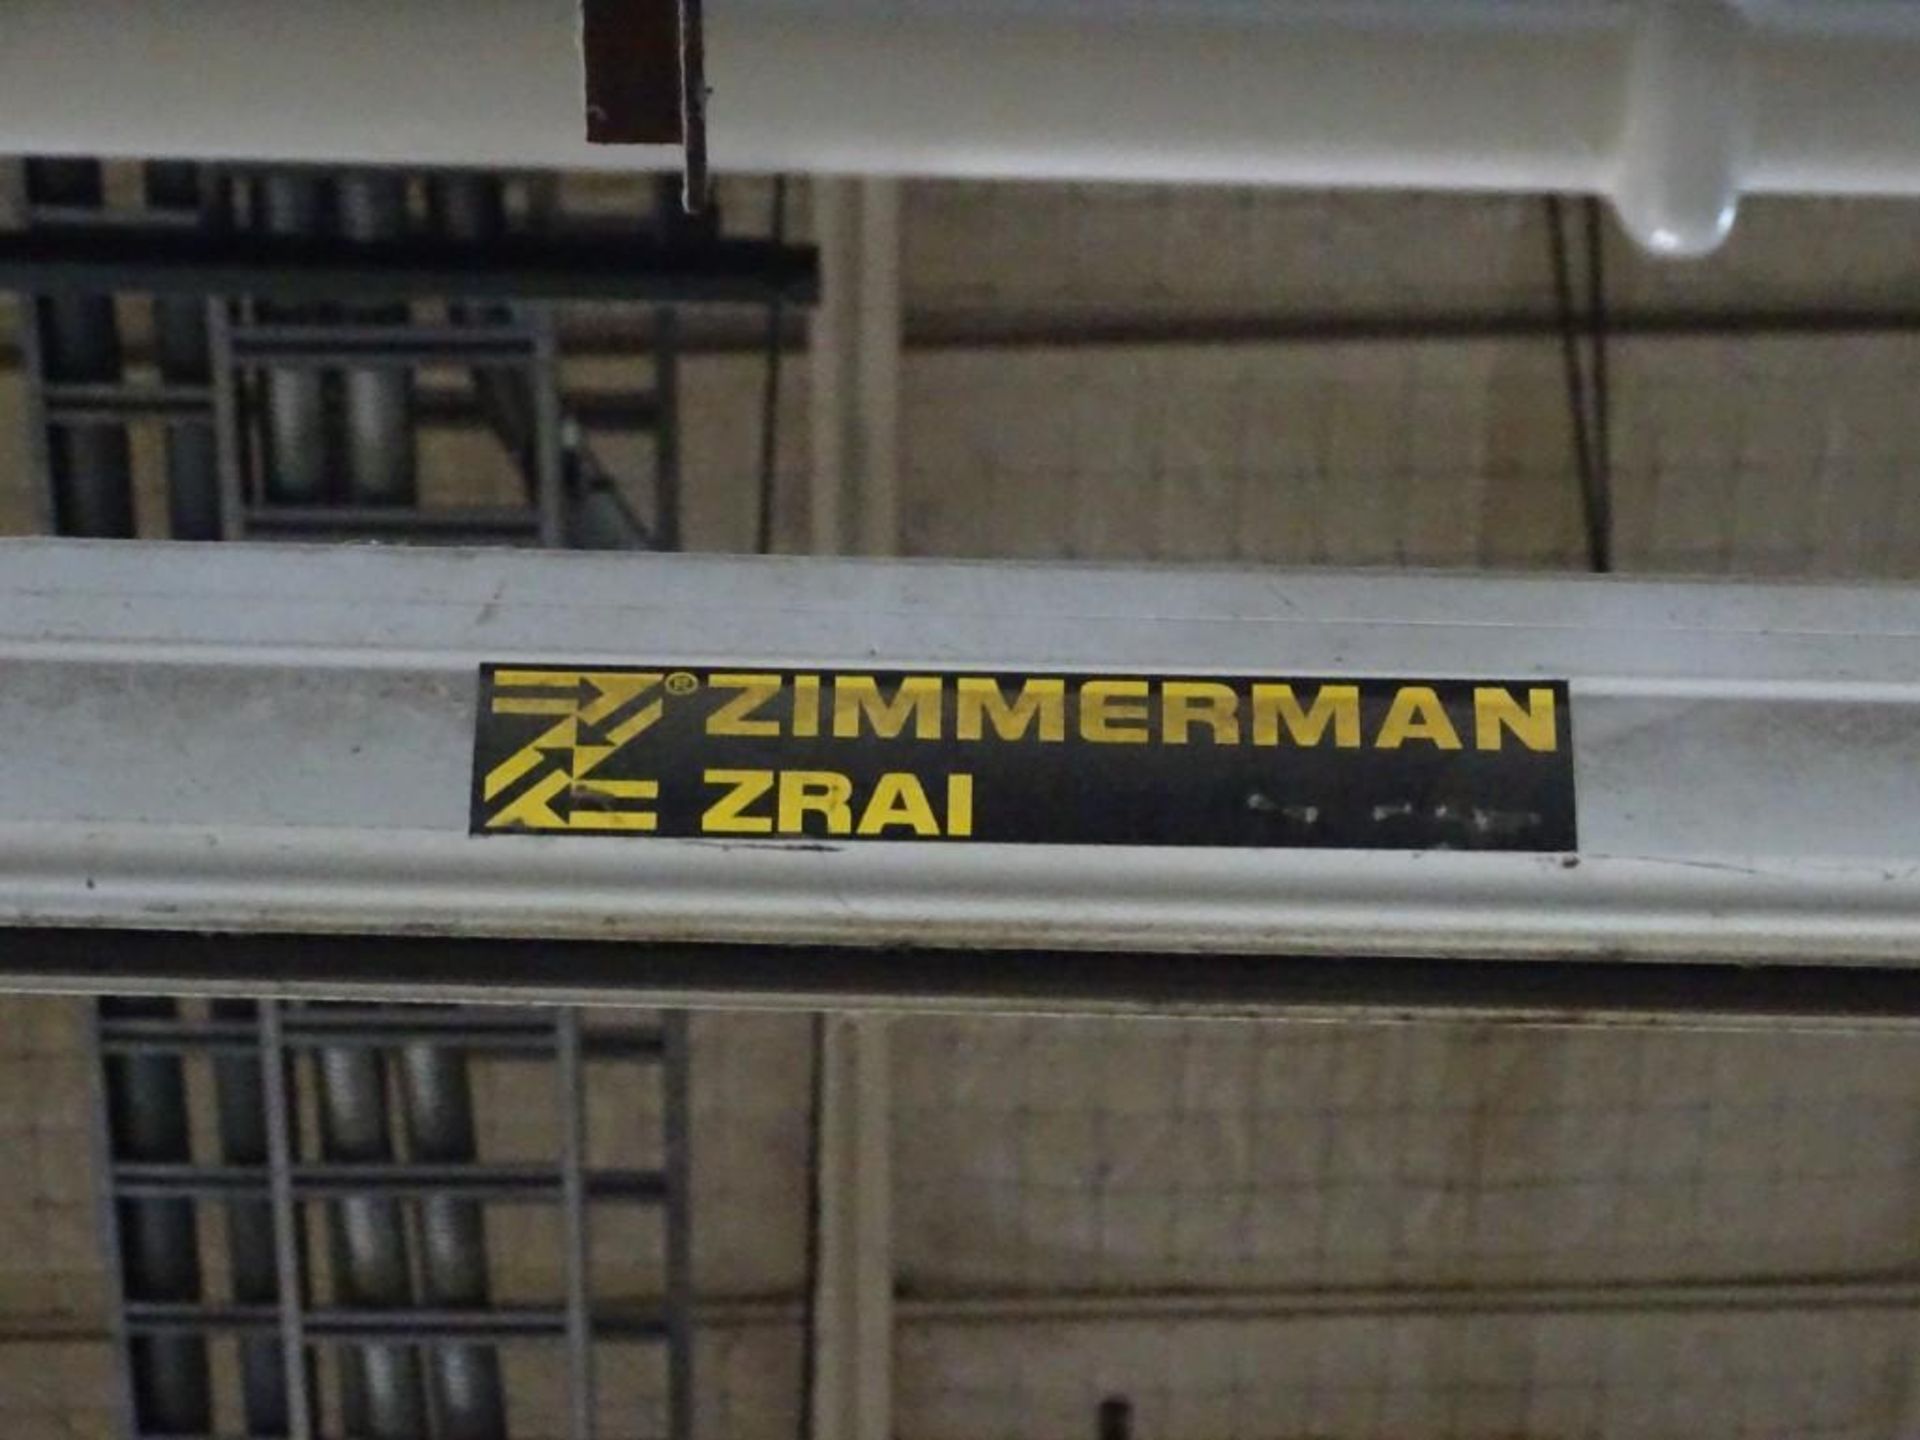 Zimmerman Rail System for Ergonomic Lift Assist - Image 7 of 8